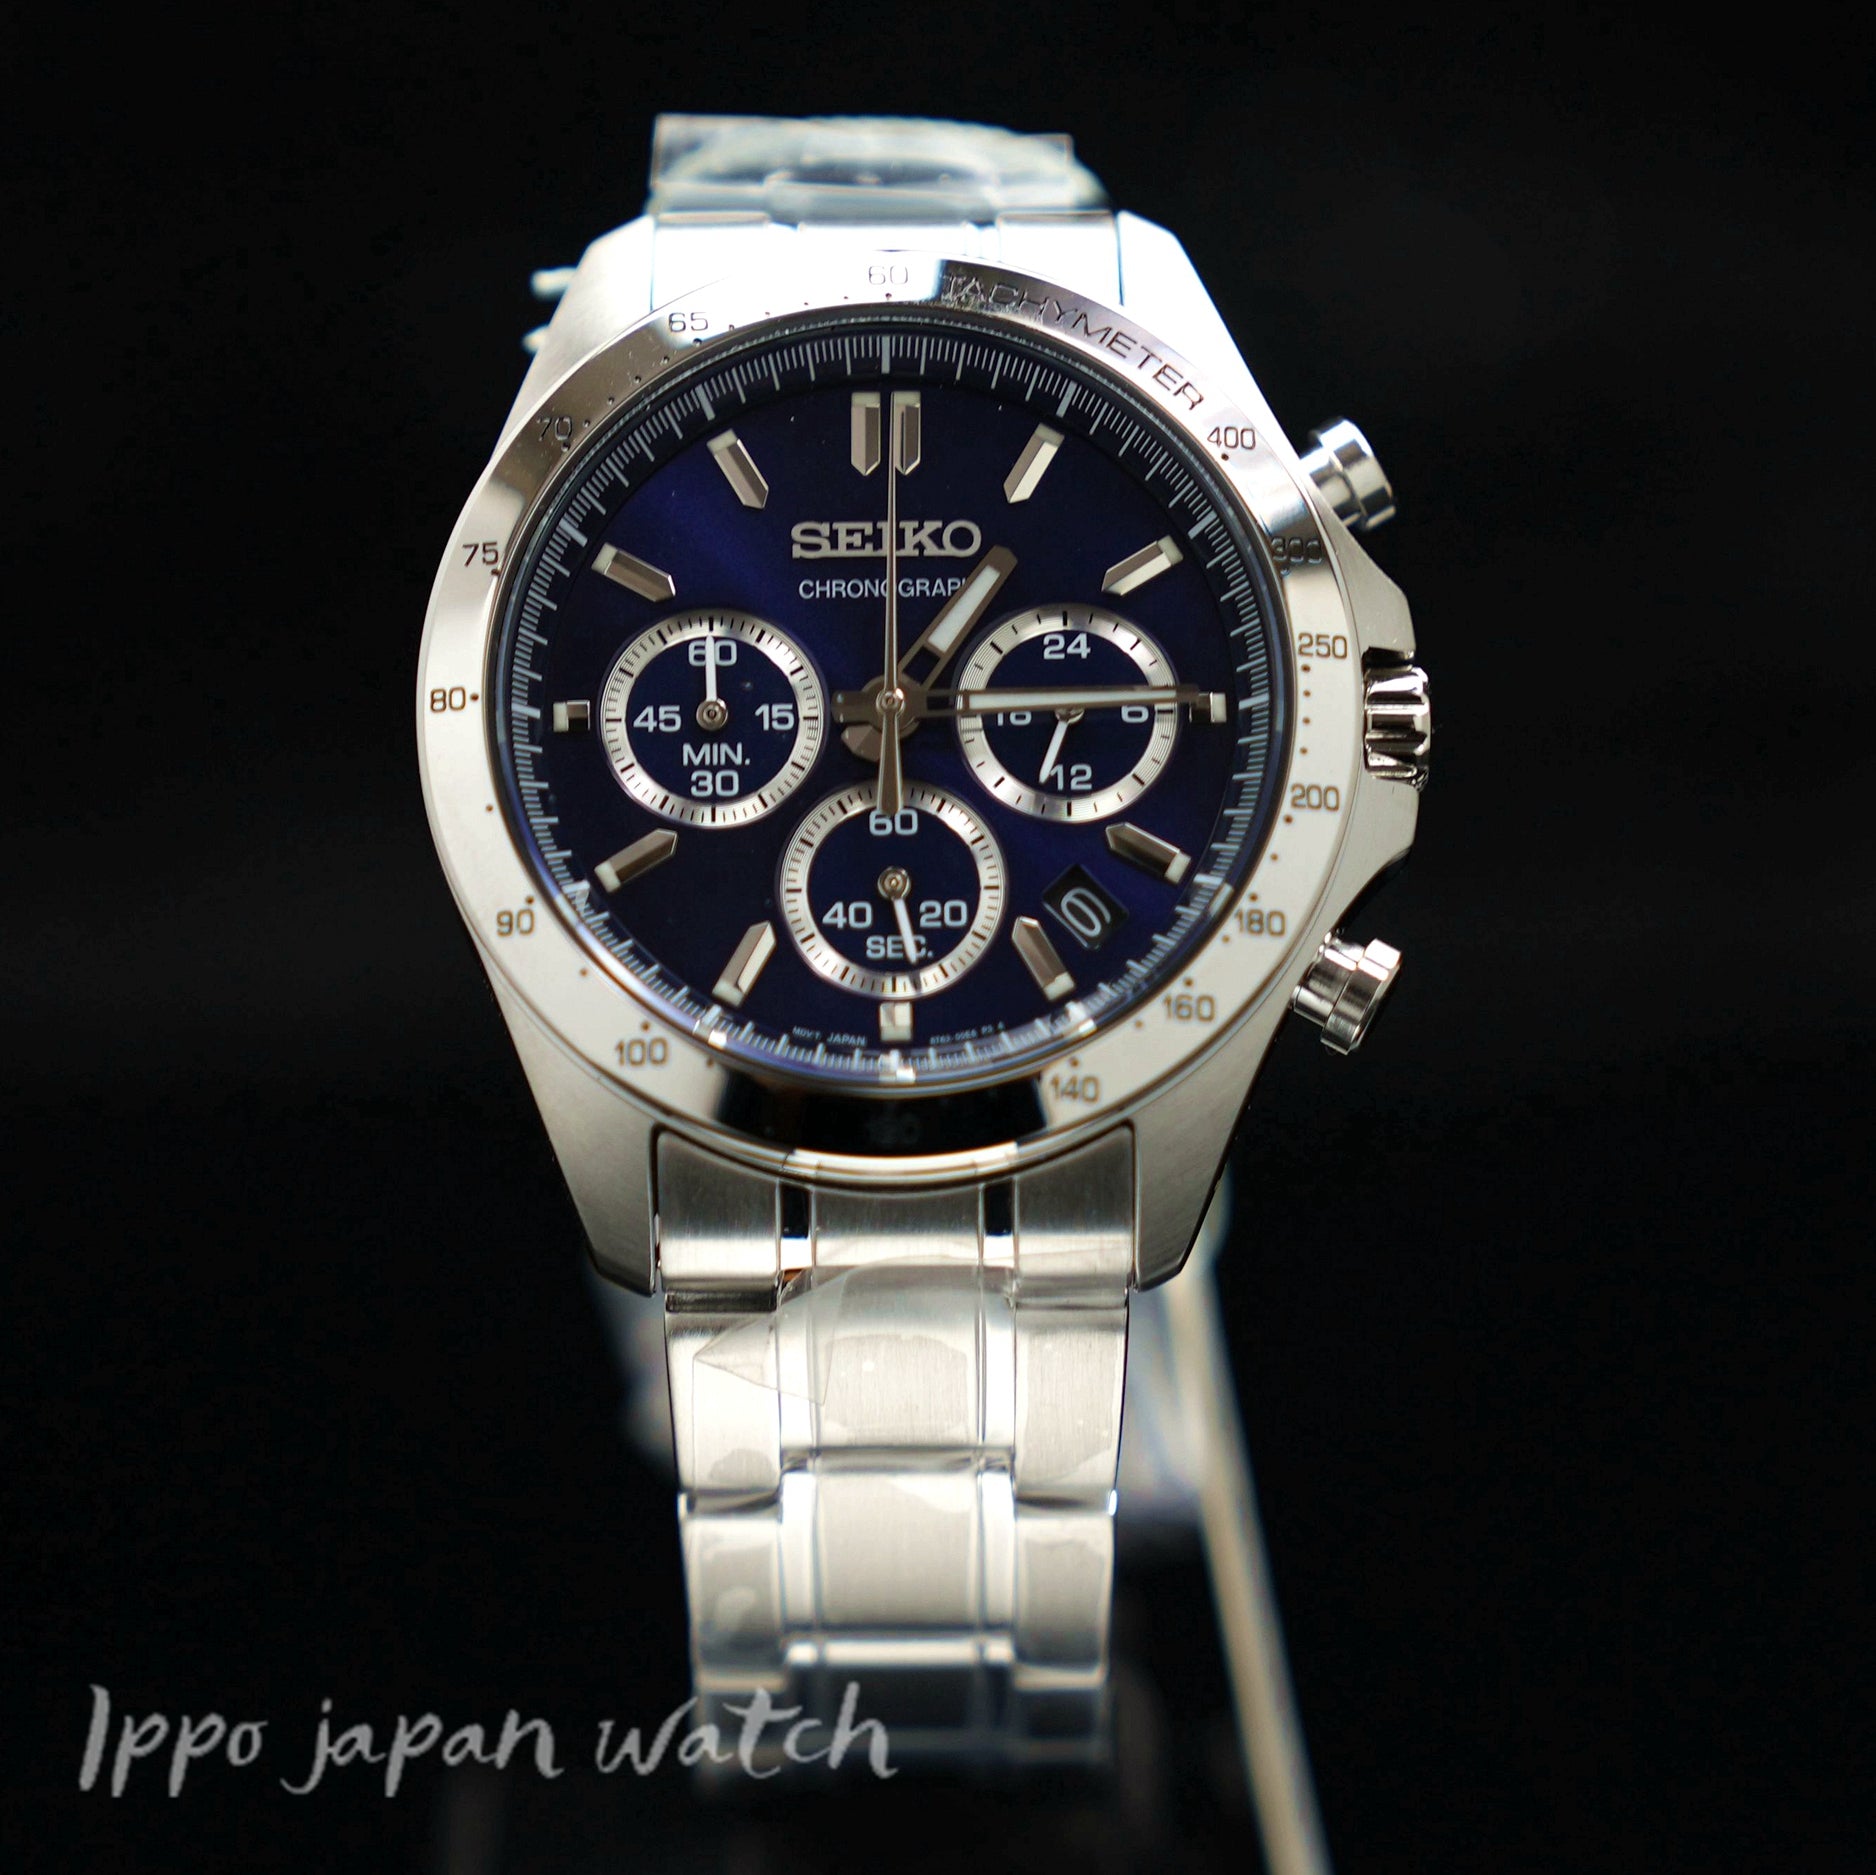 SEIKO Chronograph SBTR011 Spirit SPIRIT Watch Men's - IPPO JAPAN WATCH 